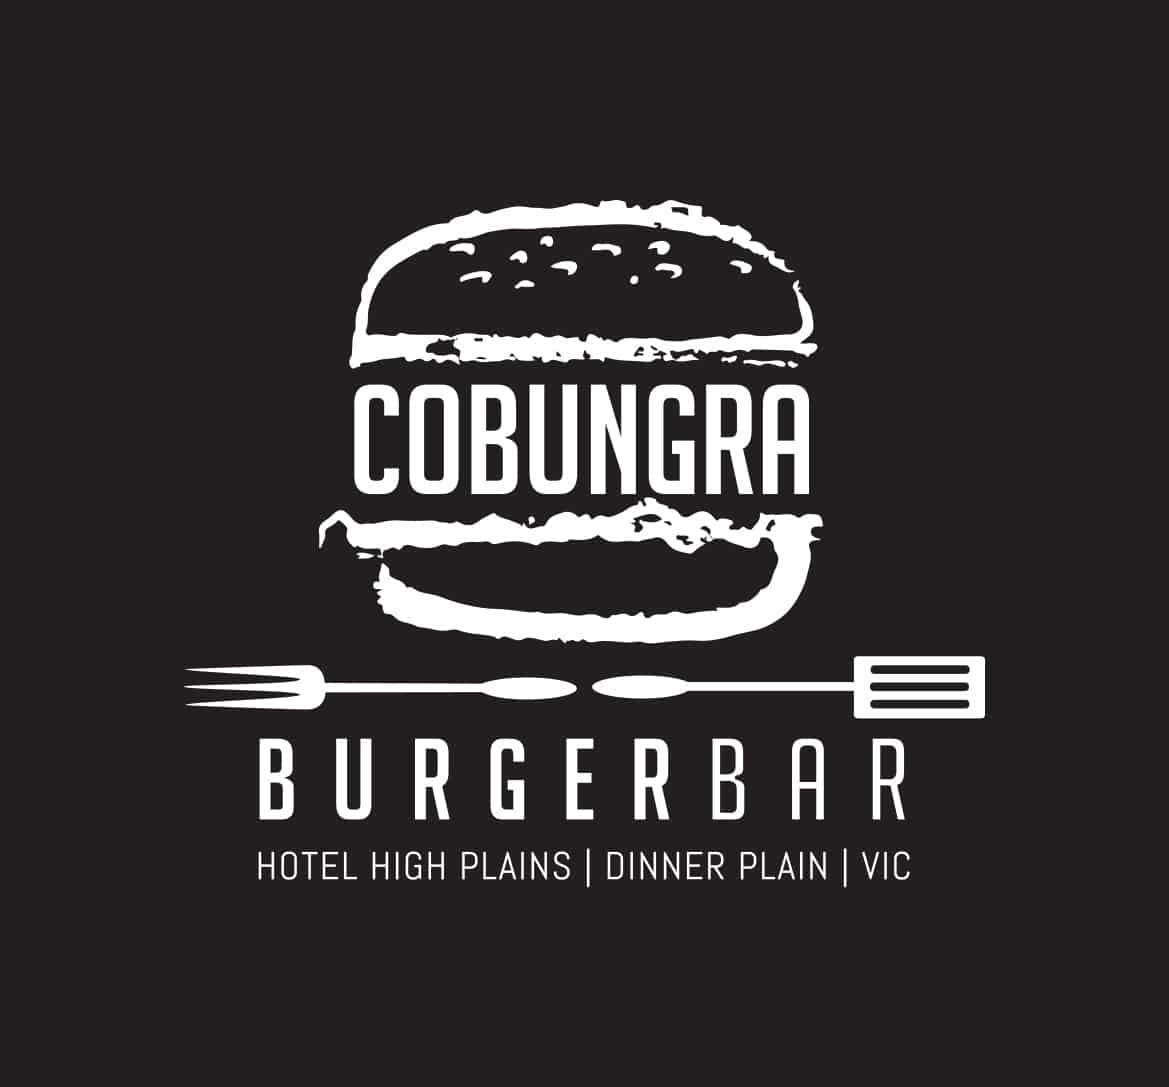 Cobungra Burger Bar - Victoria's High Country